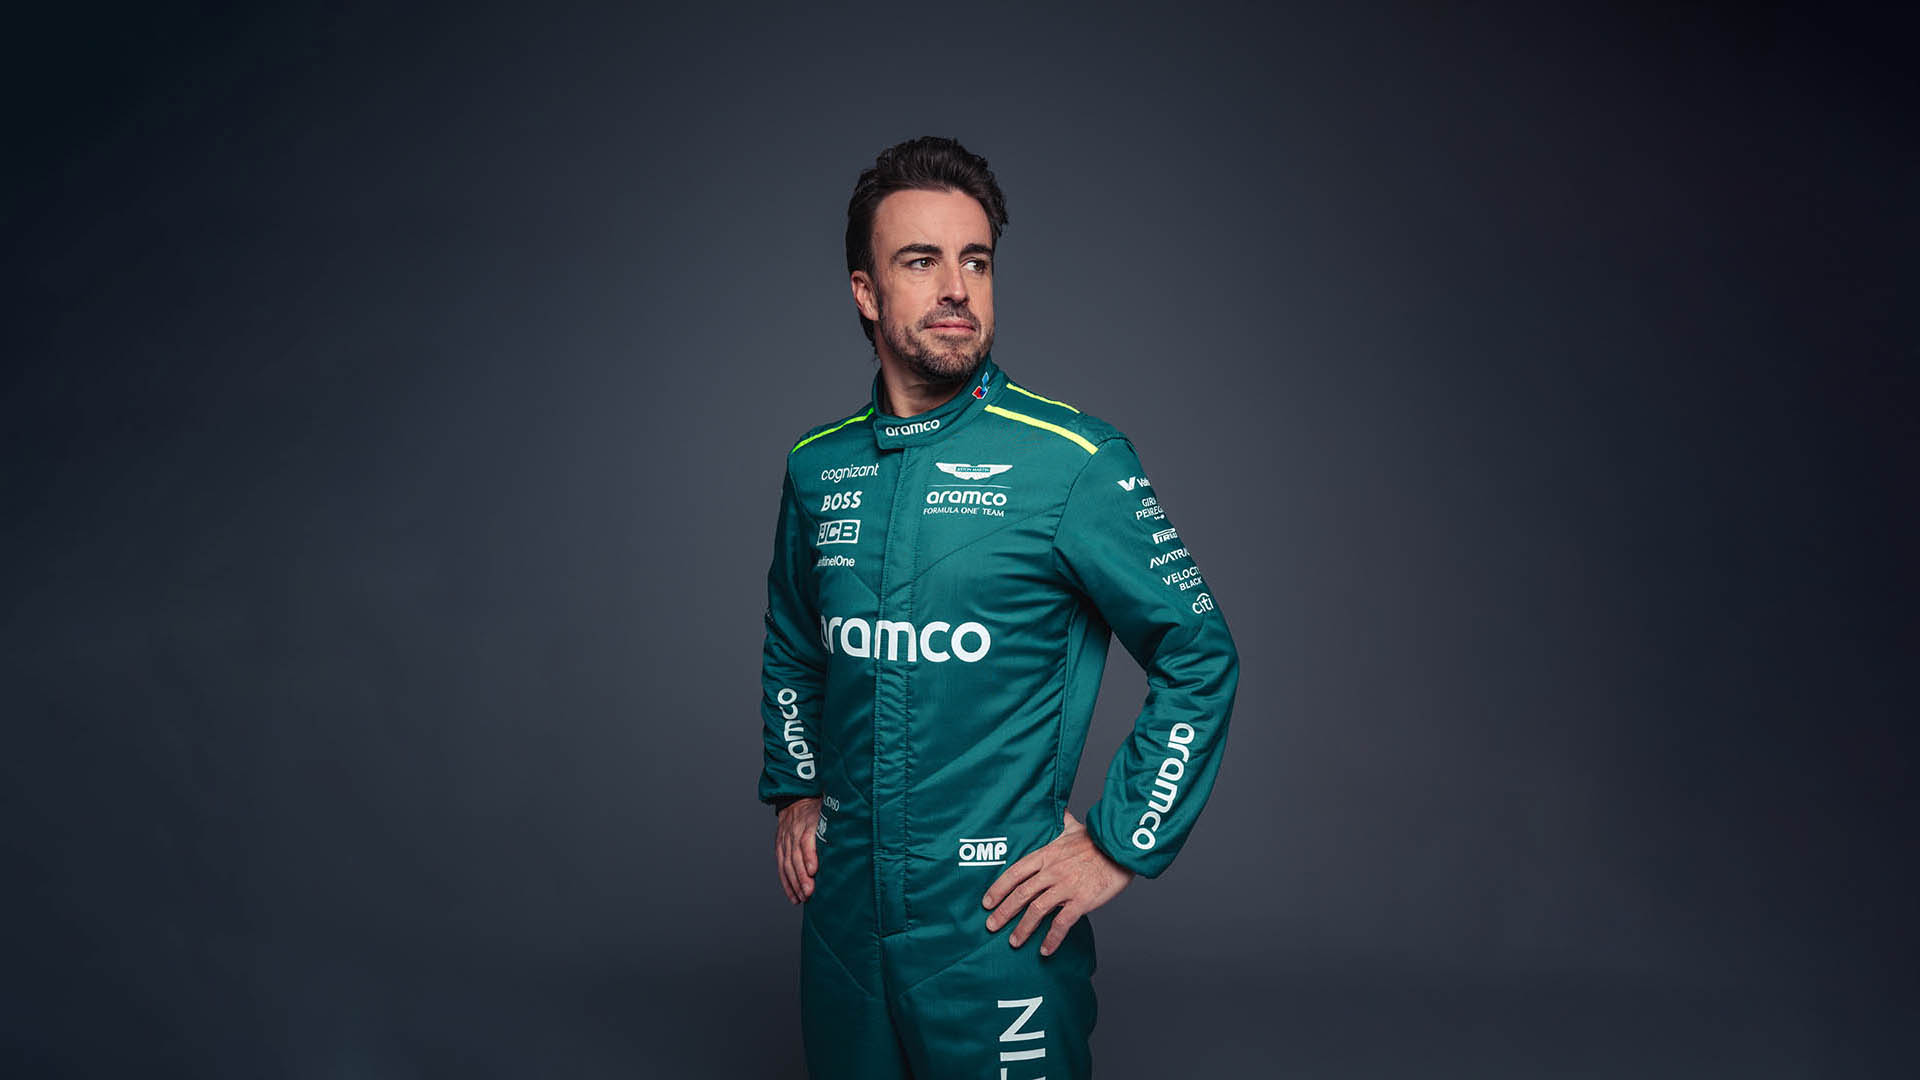 F1 - Fernando Alonso (Aston Martin)